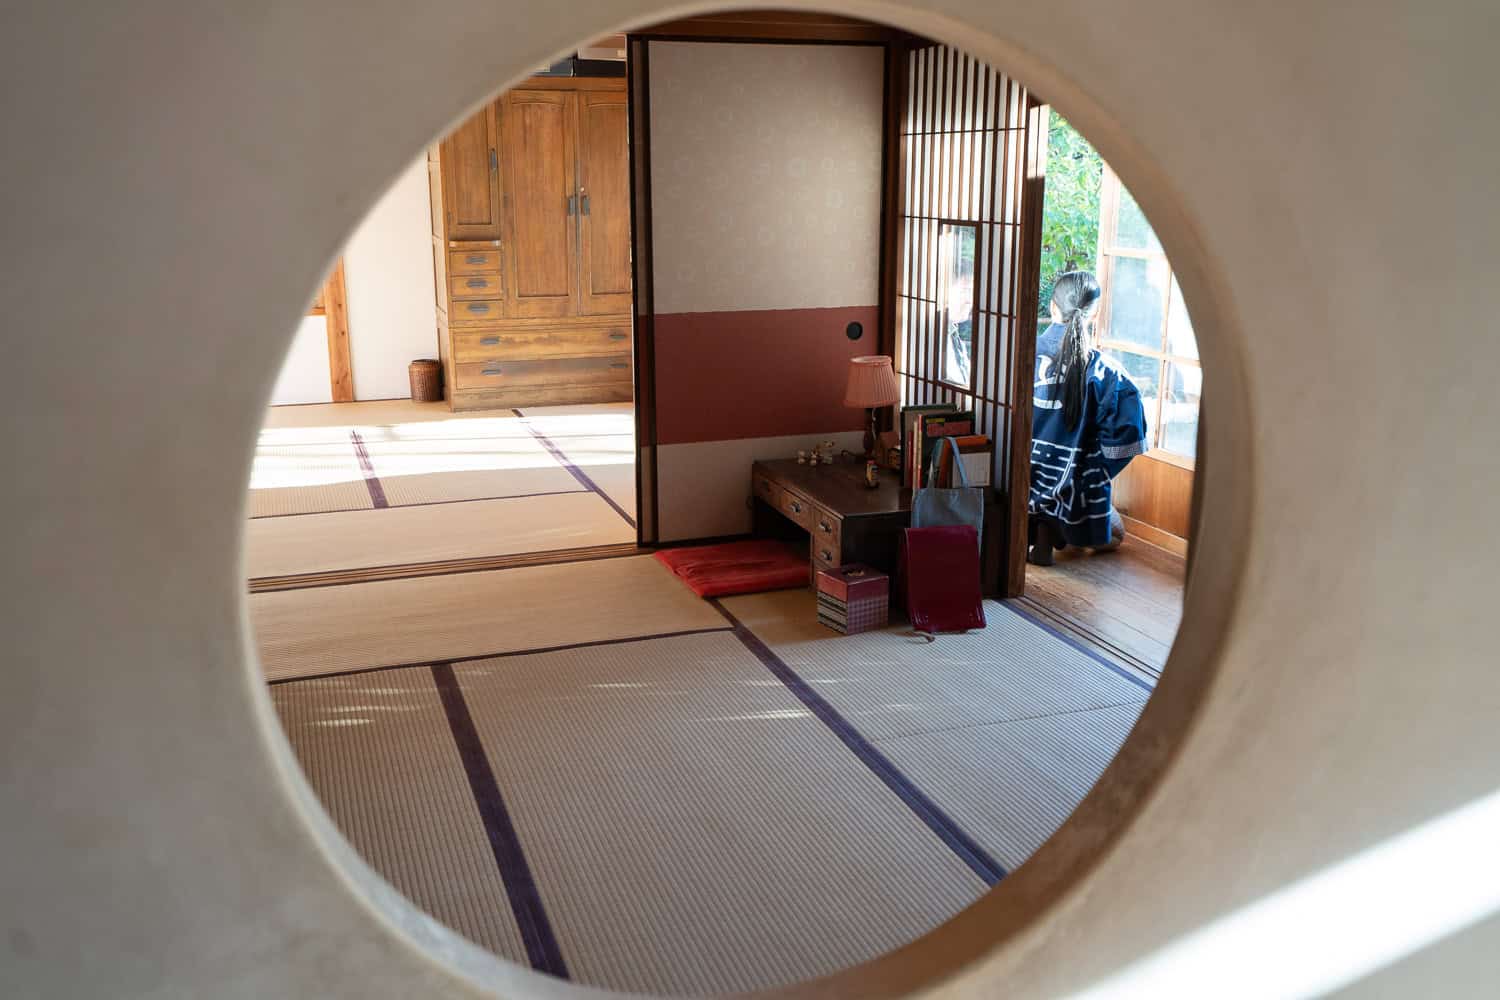 Tatami mat living room from My Neighbor Totoro, Ghibli Park, Japan